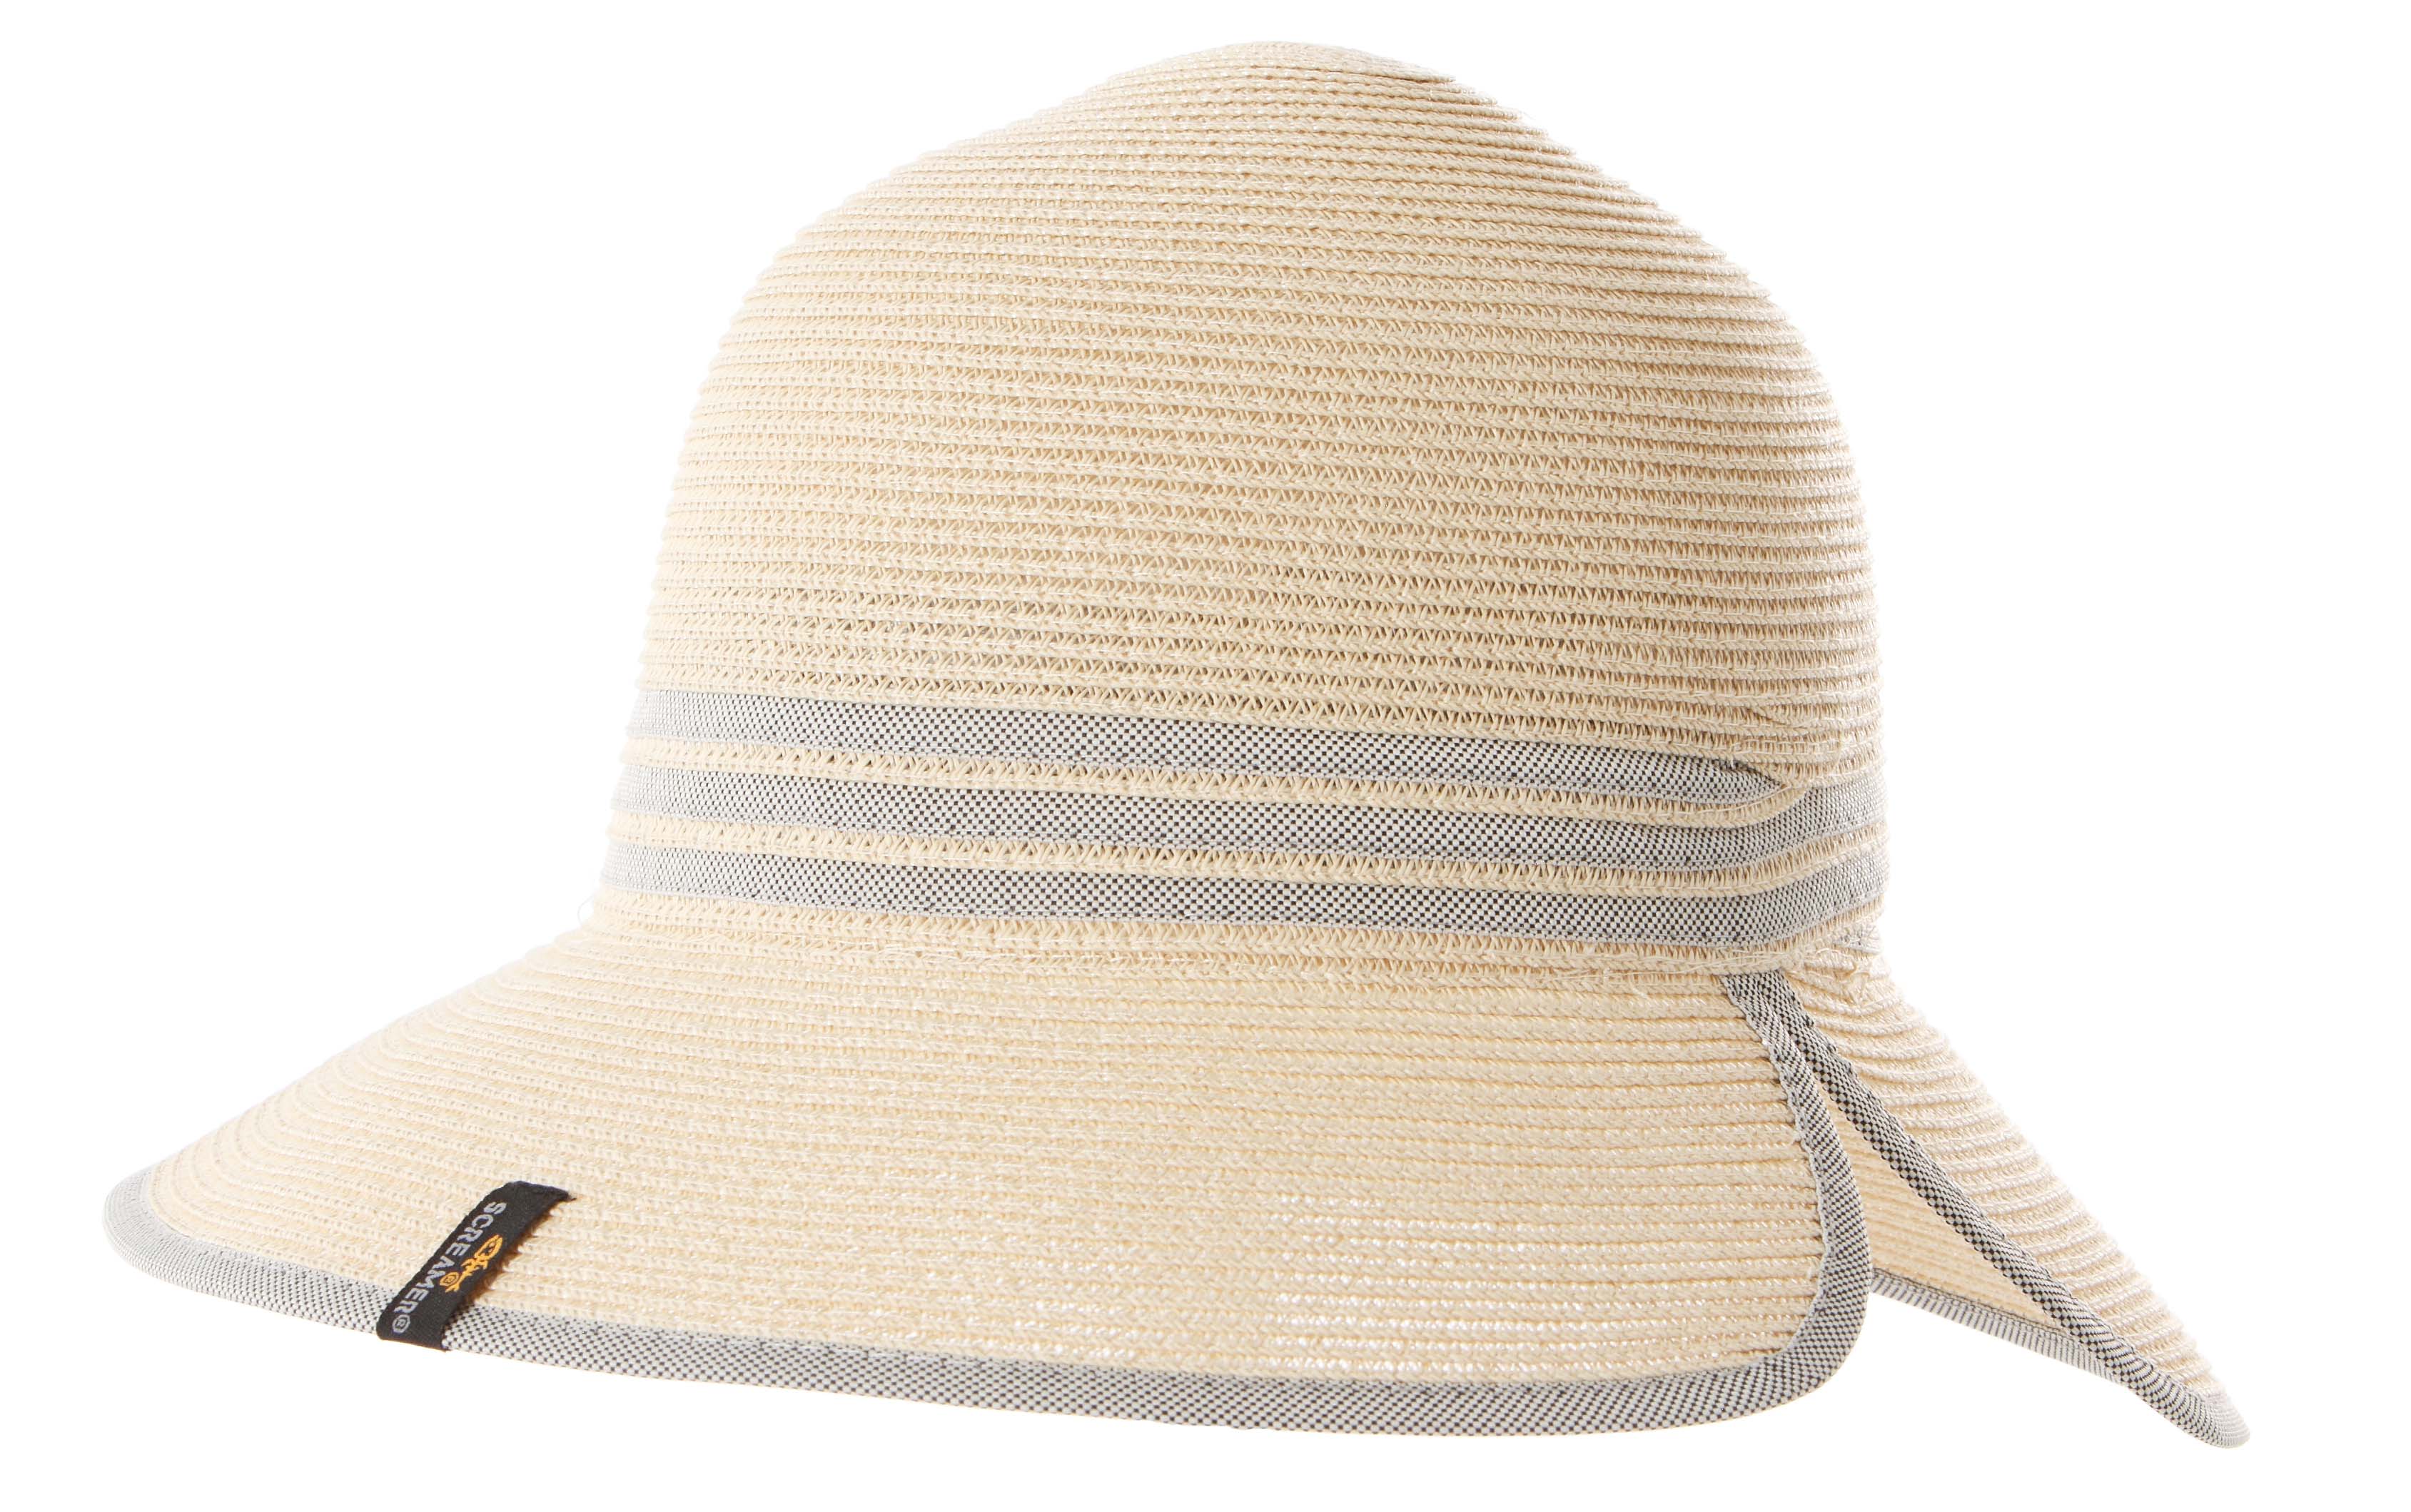 Riviera Crushable Sun Hat